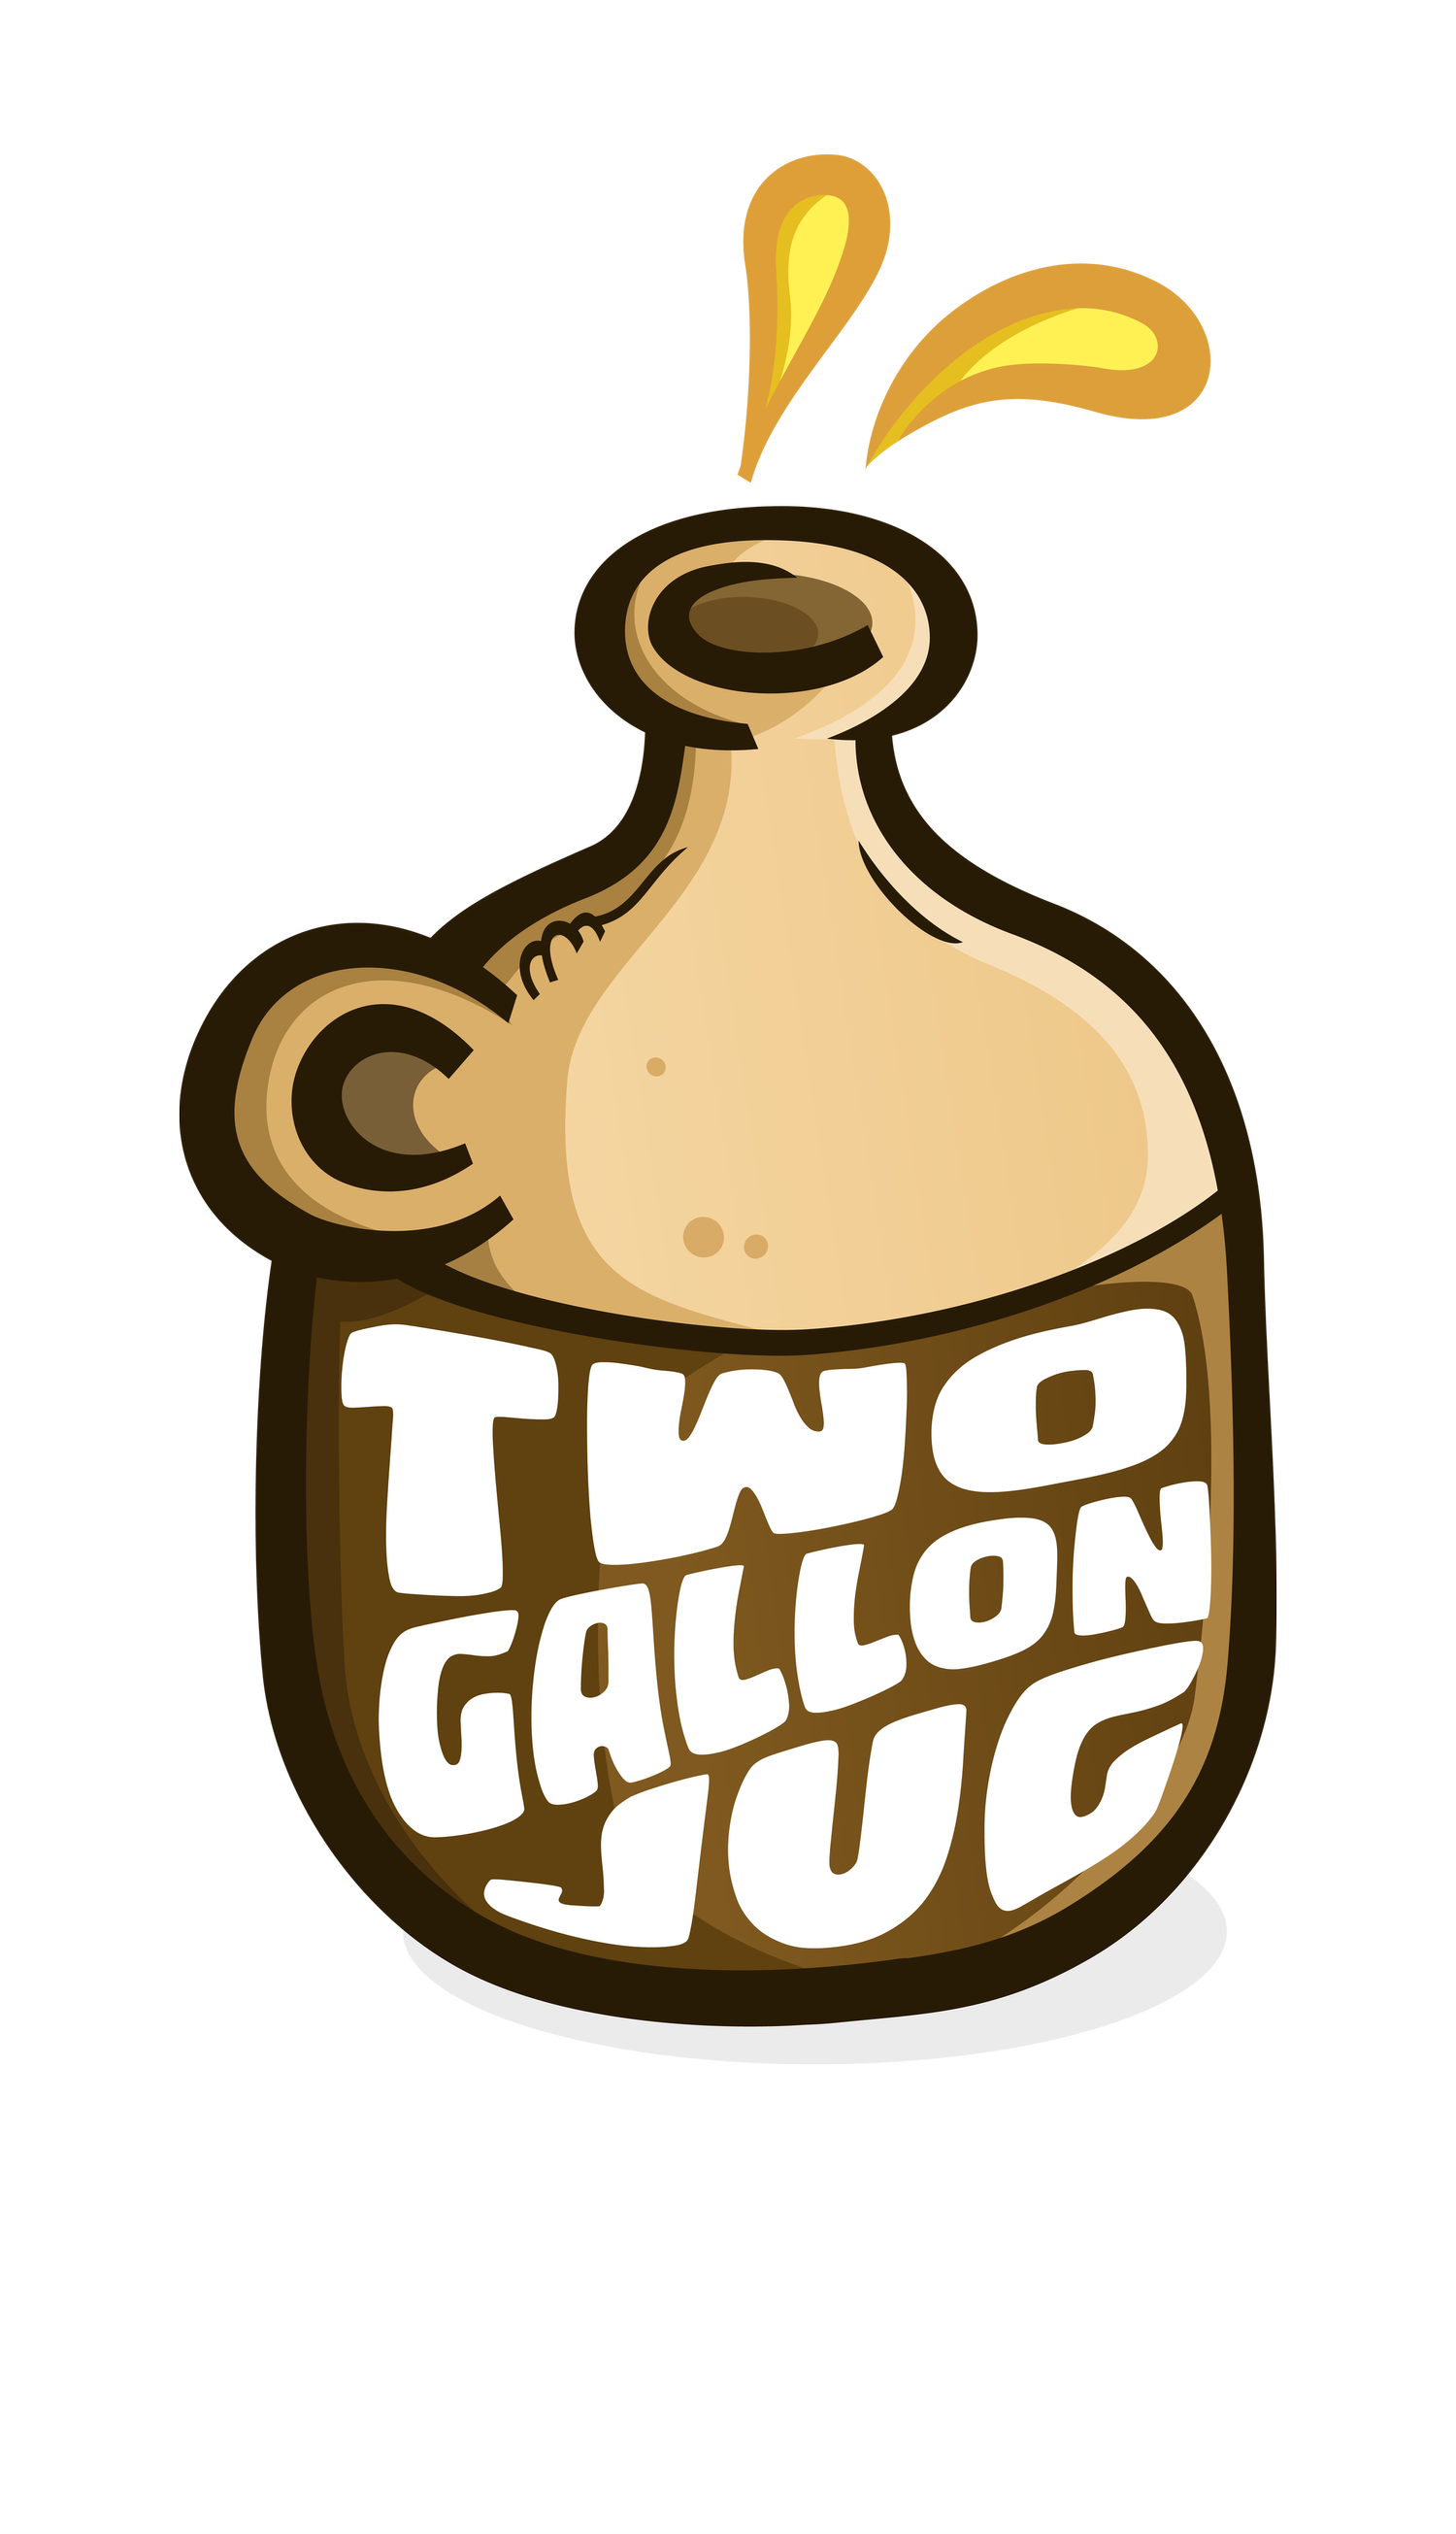 TwoGallonJug